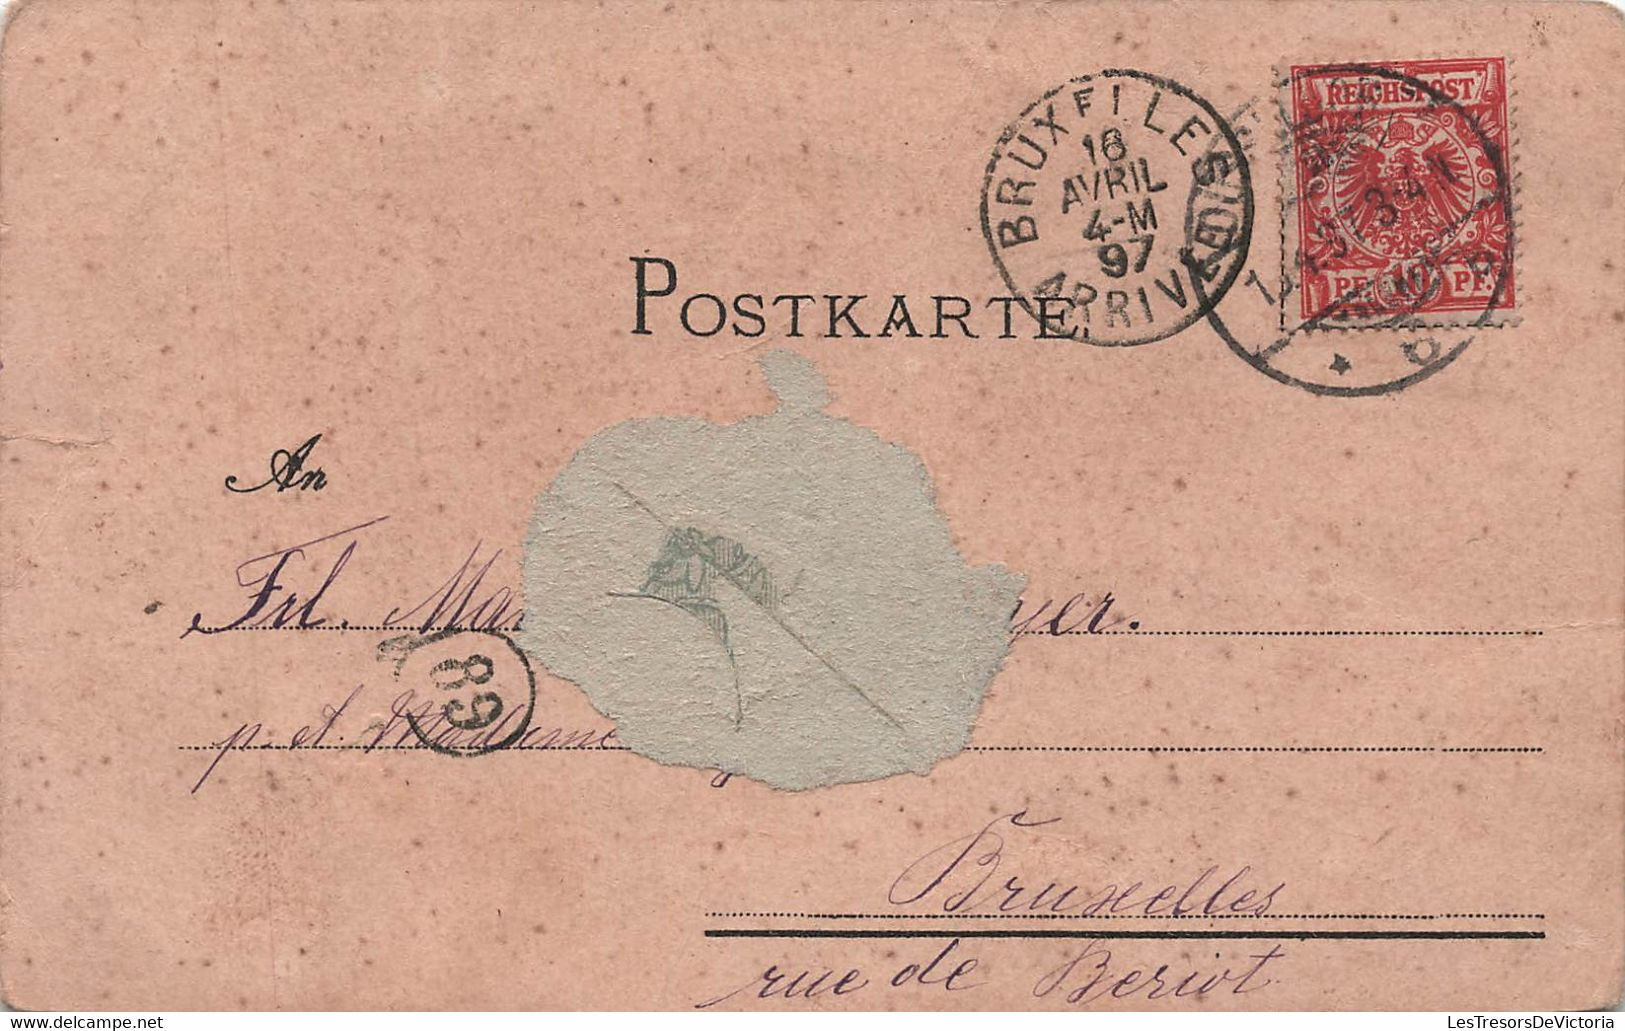 CPA Allemage - Gruss Aus SCHWEINFURT - Carte Multivues - Carte Voyagée Et Oblitérée En 1897 - Schweinfurt